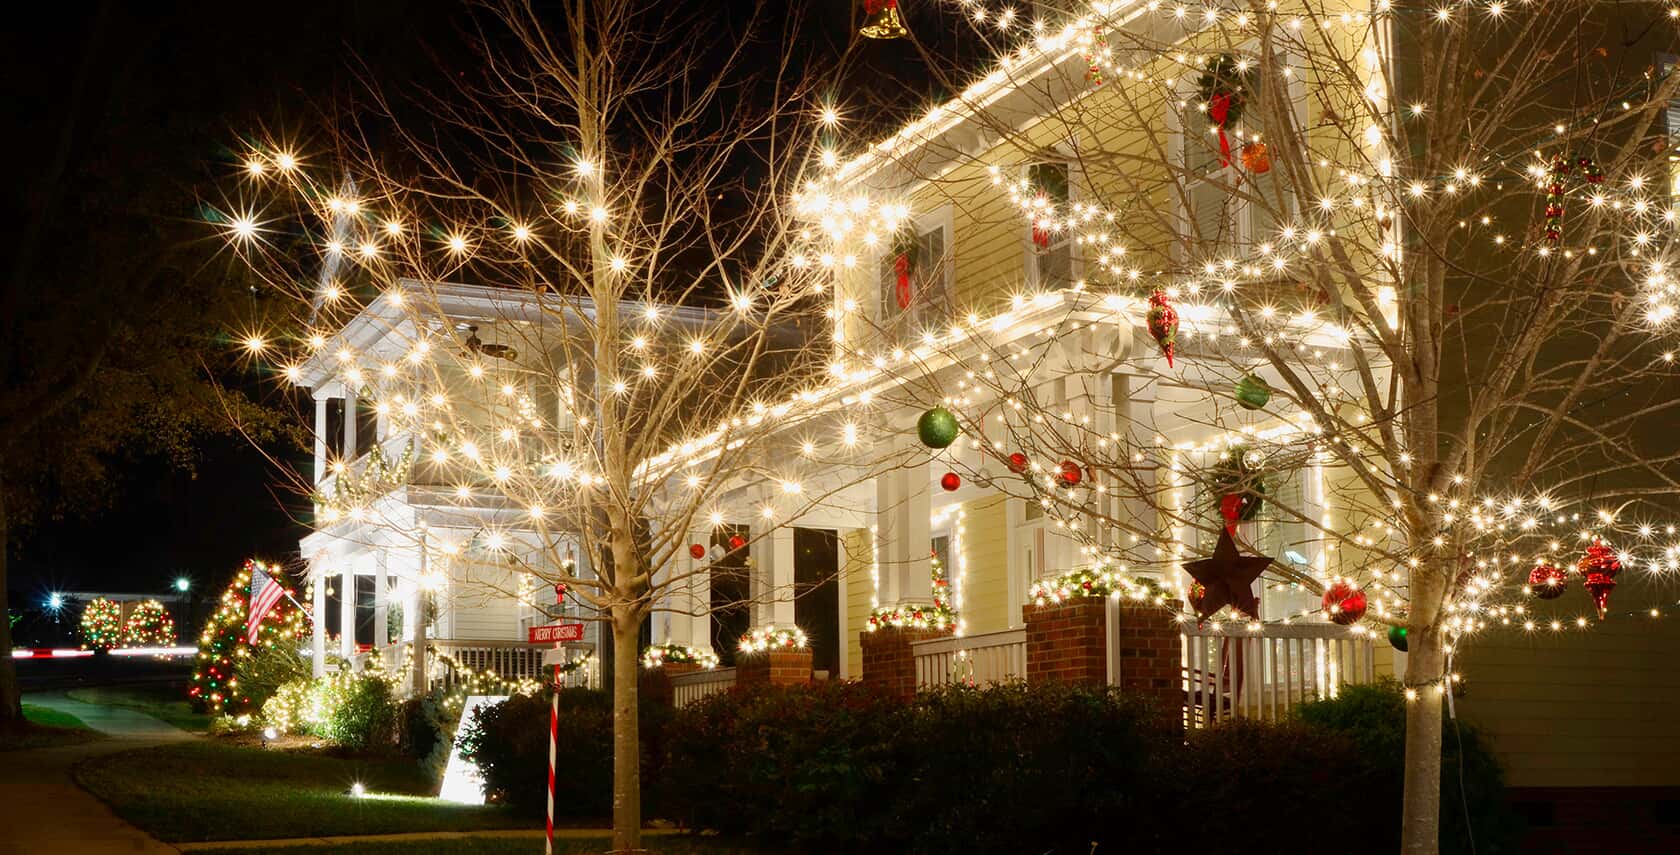 building with holiday lighting and tree lighting